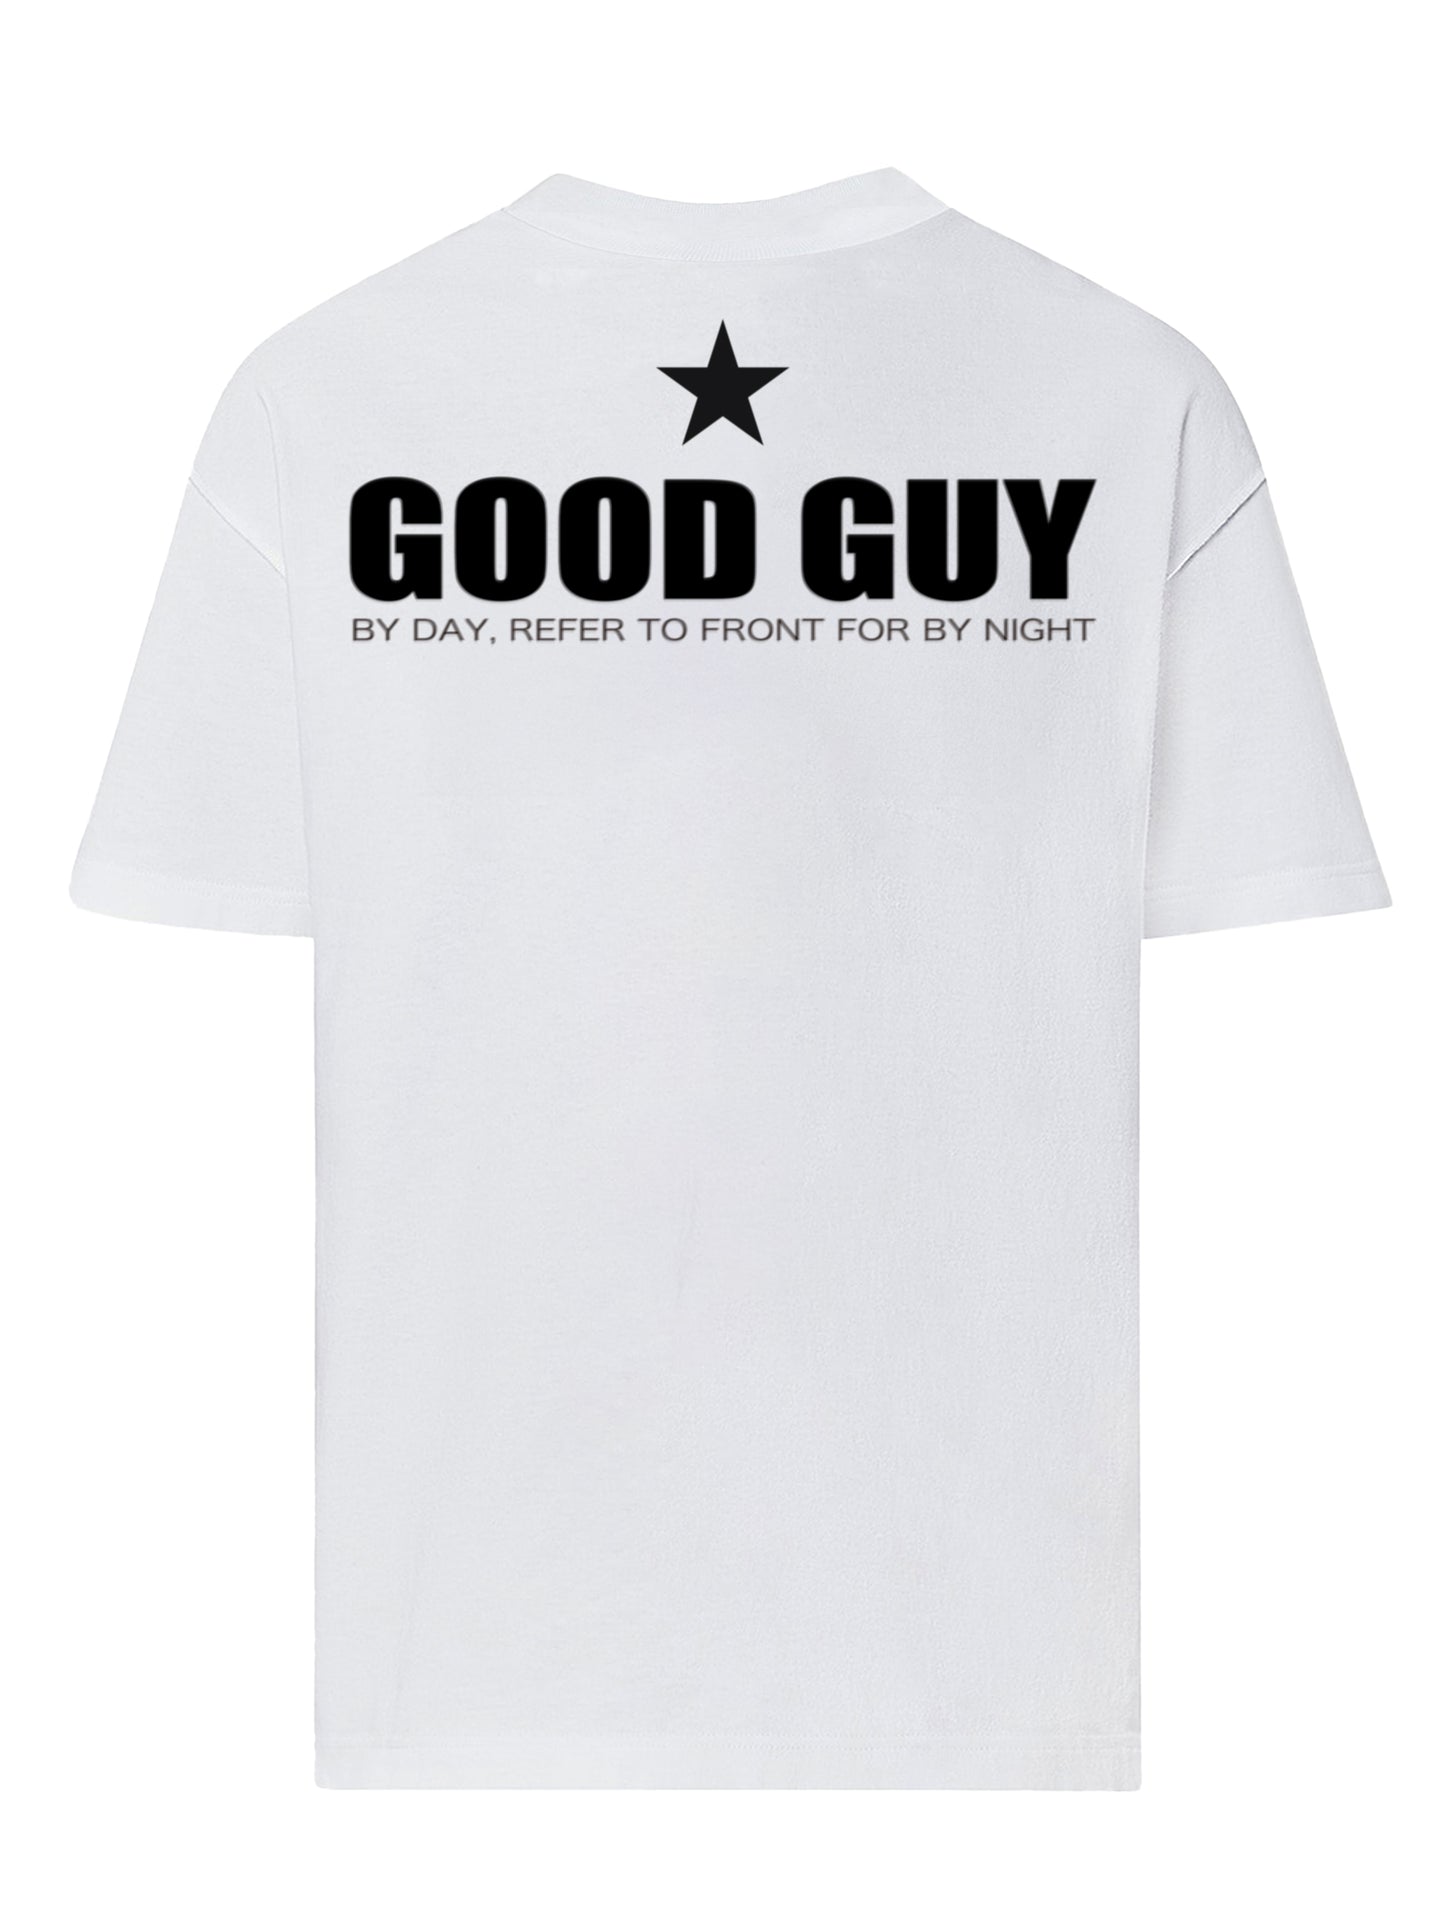 BAD BOY / GOOD GUY Chappy T-shirt